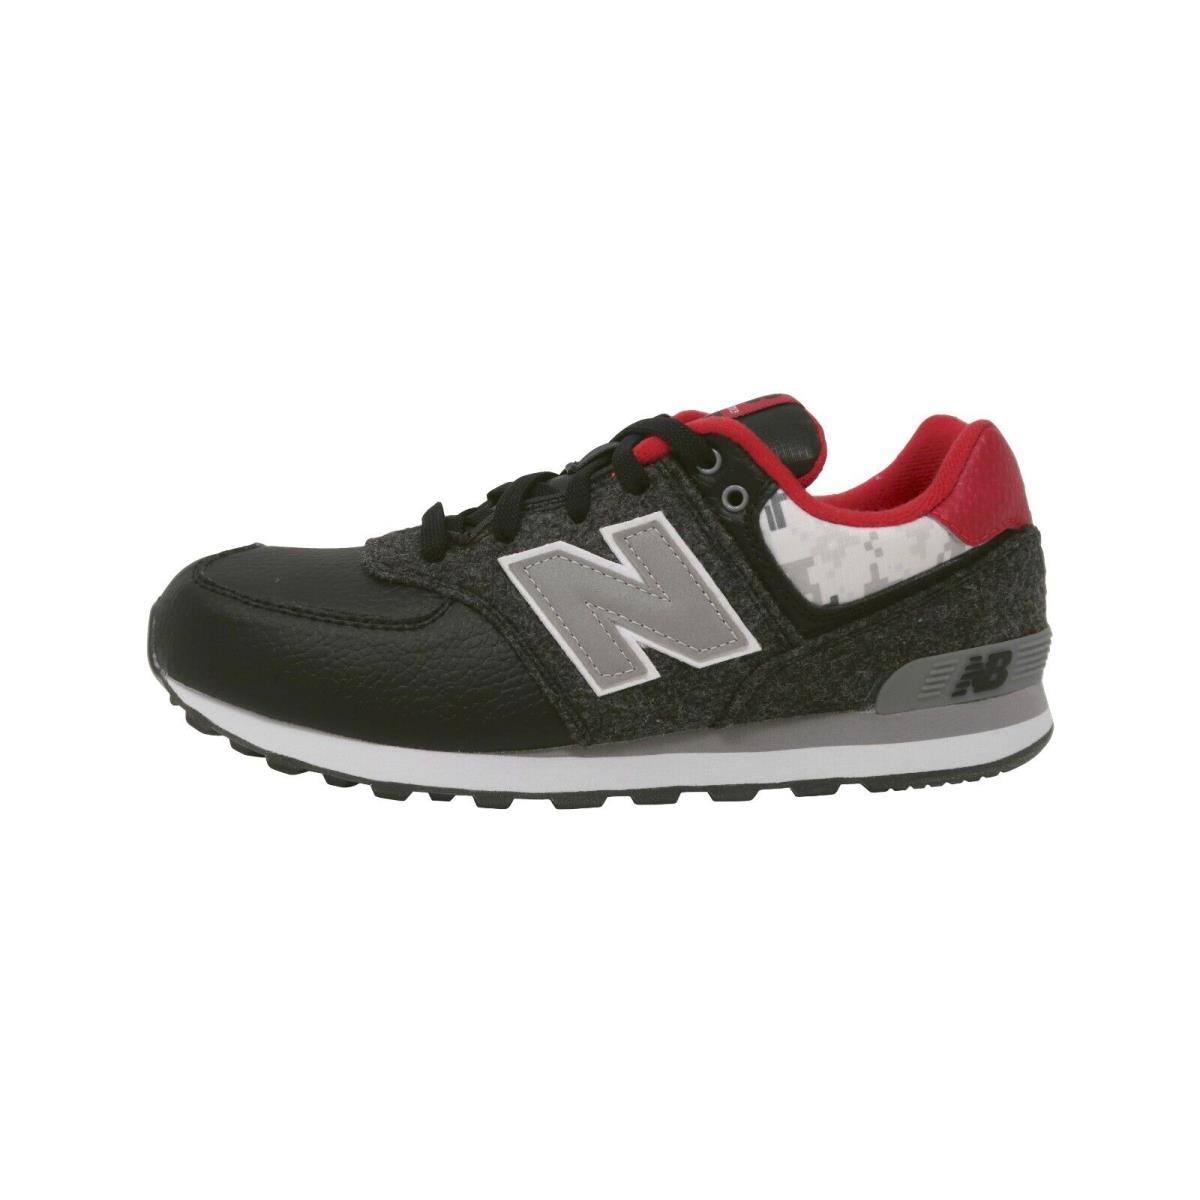 New Balance 574 Big Kids Running Shoes Sneakers KL574FWG - Black/grey/red